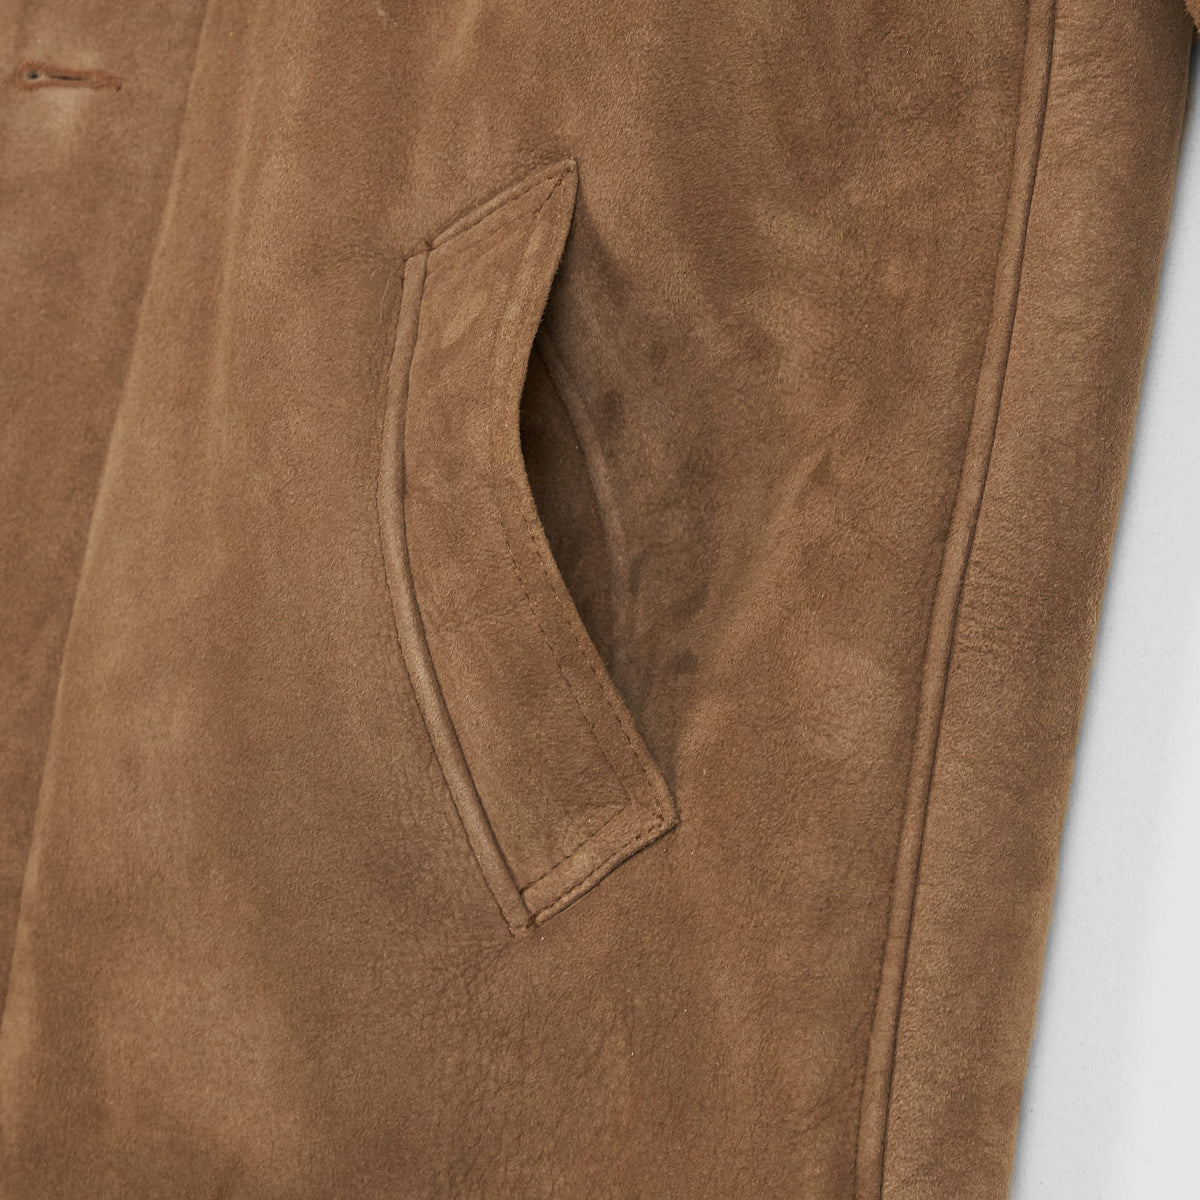 Schott N.Y.C. Classic Shearling Leather Jacket